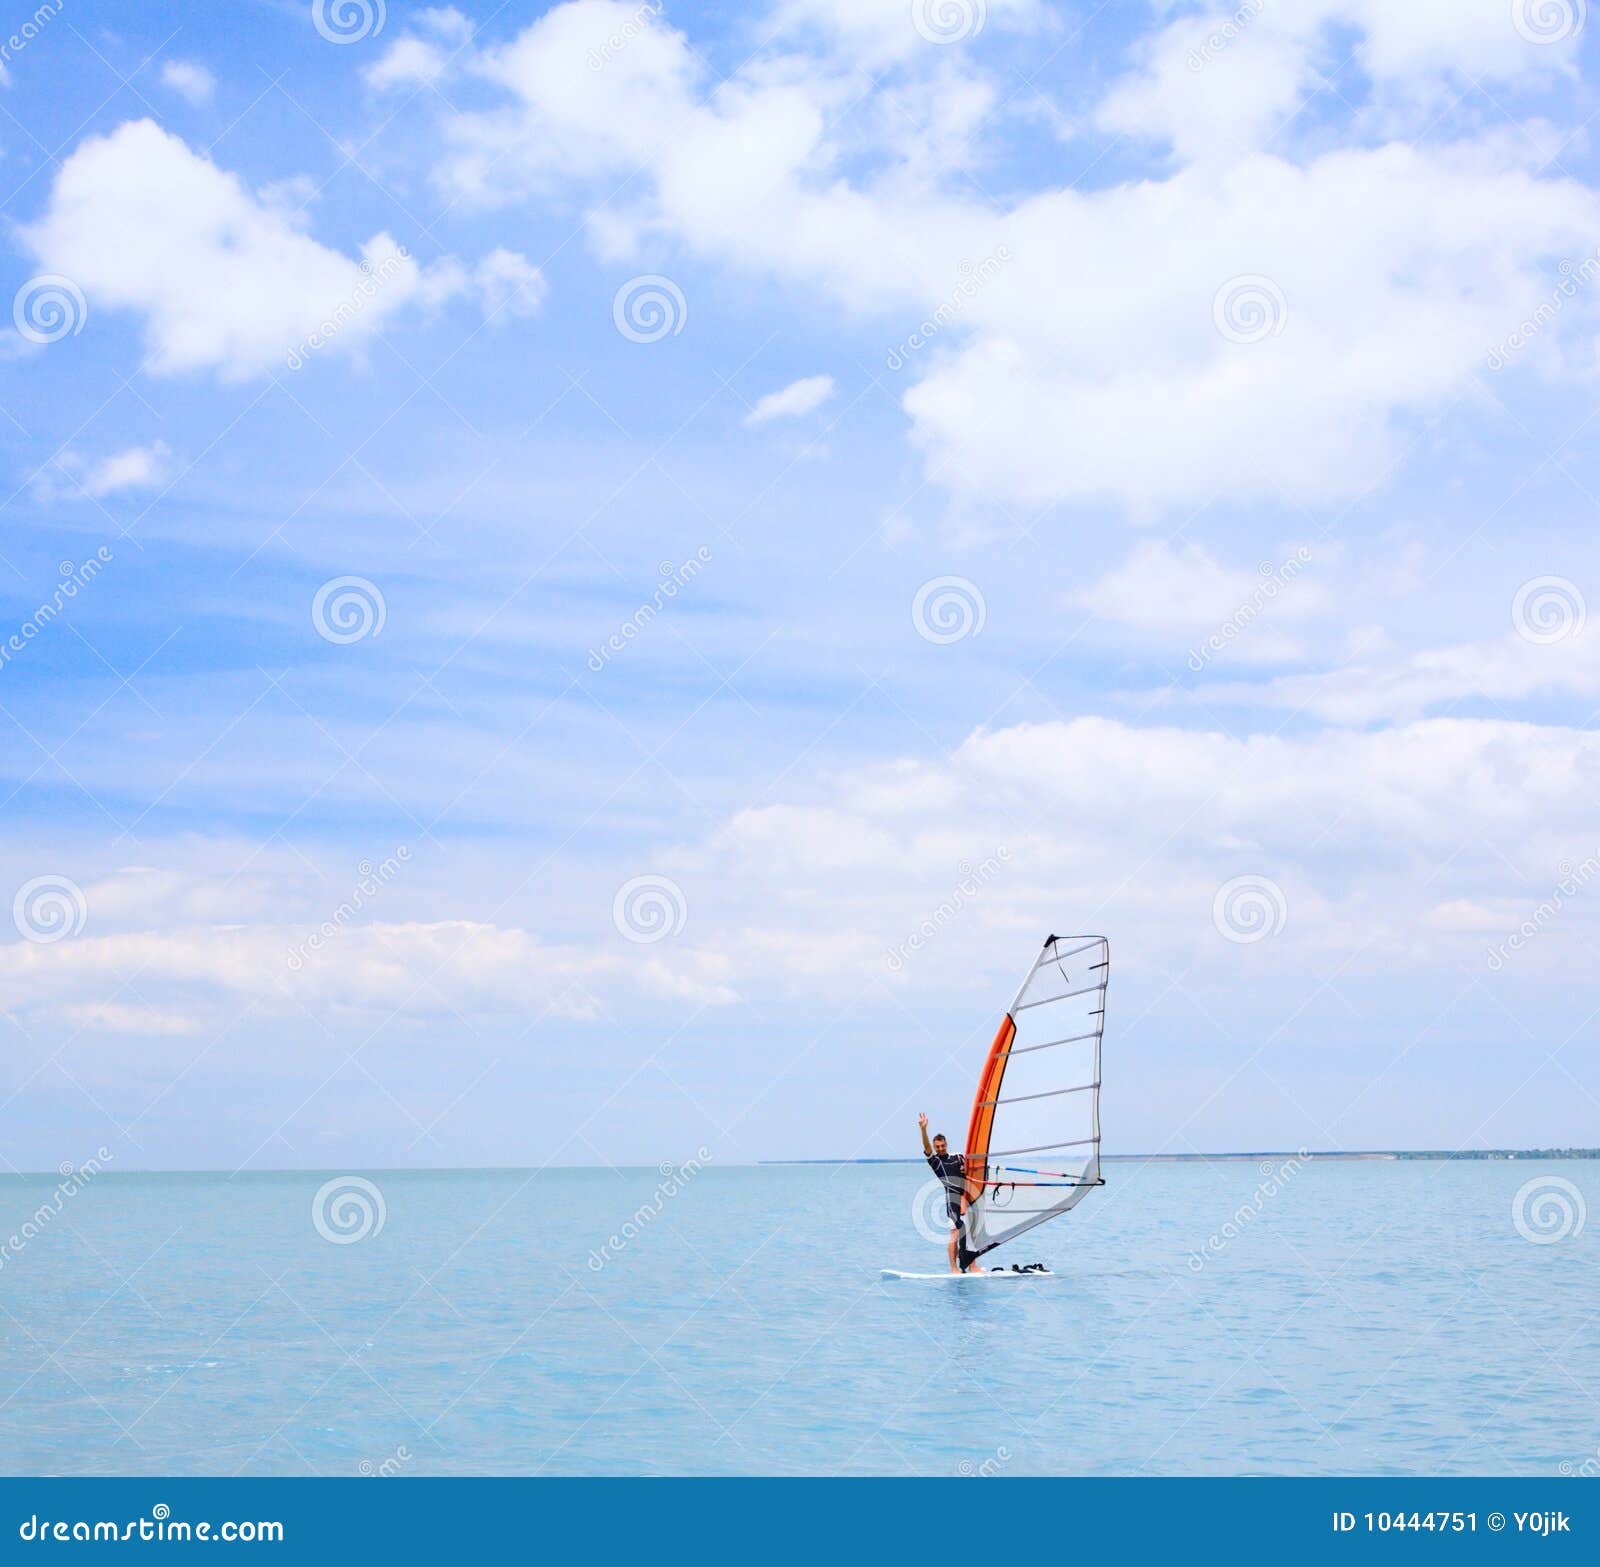 a man on a windsurf